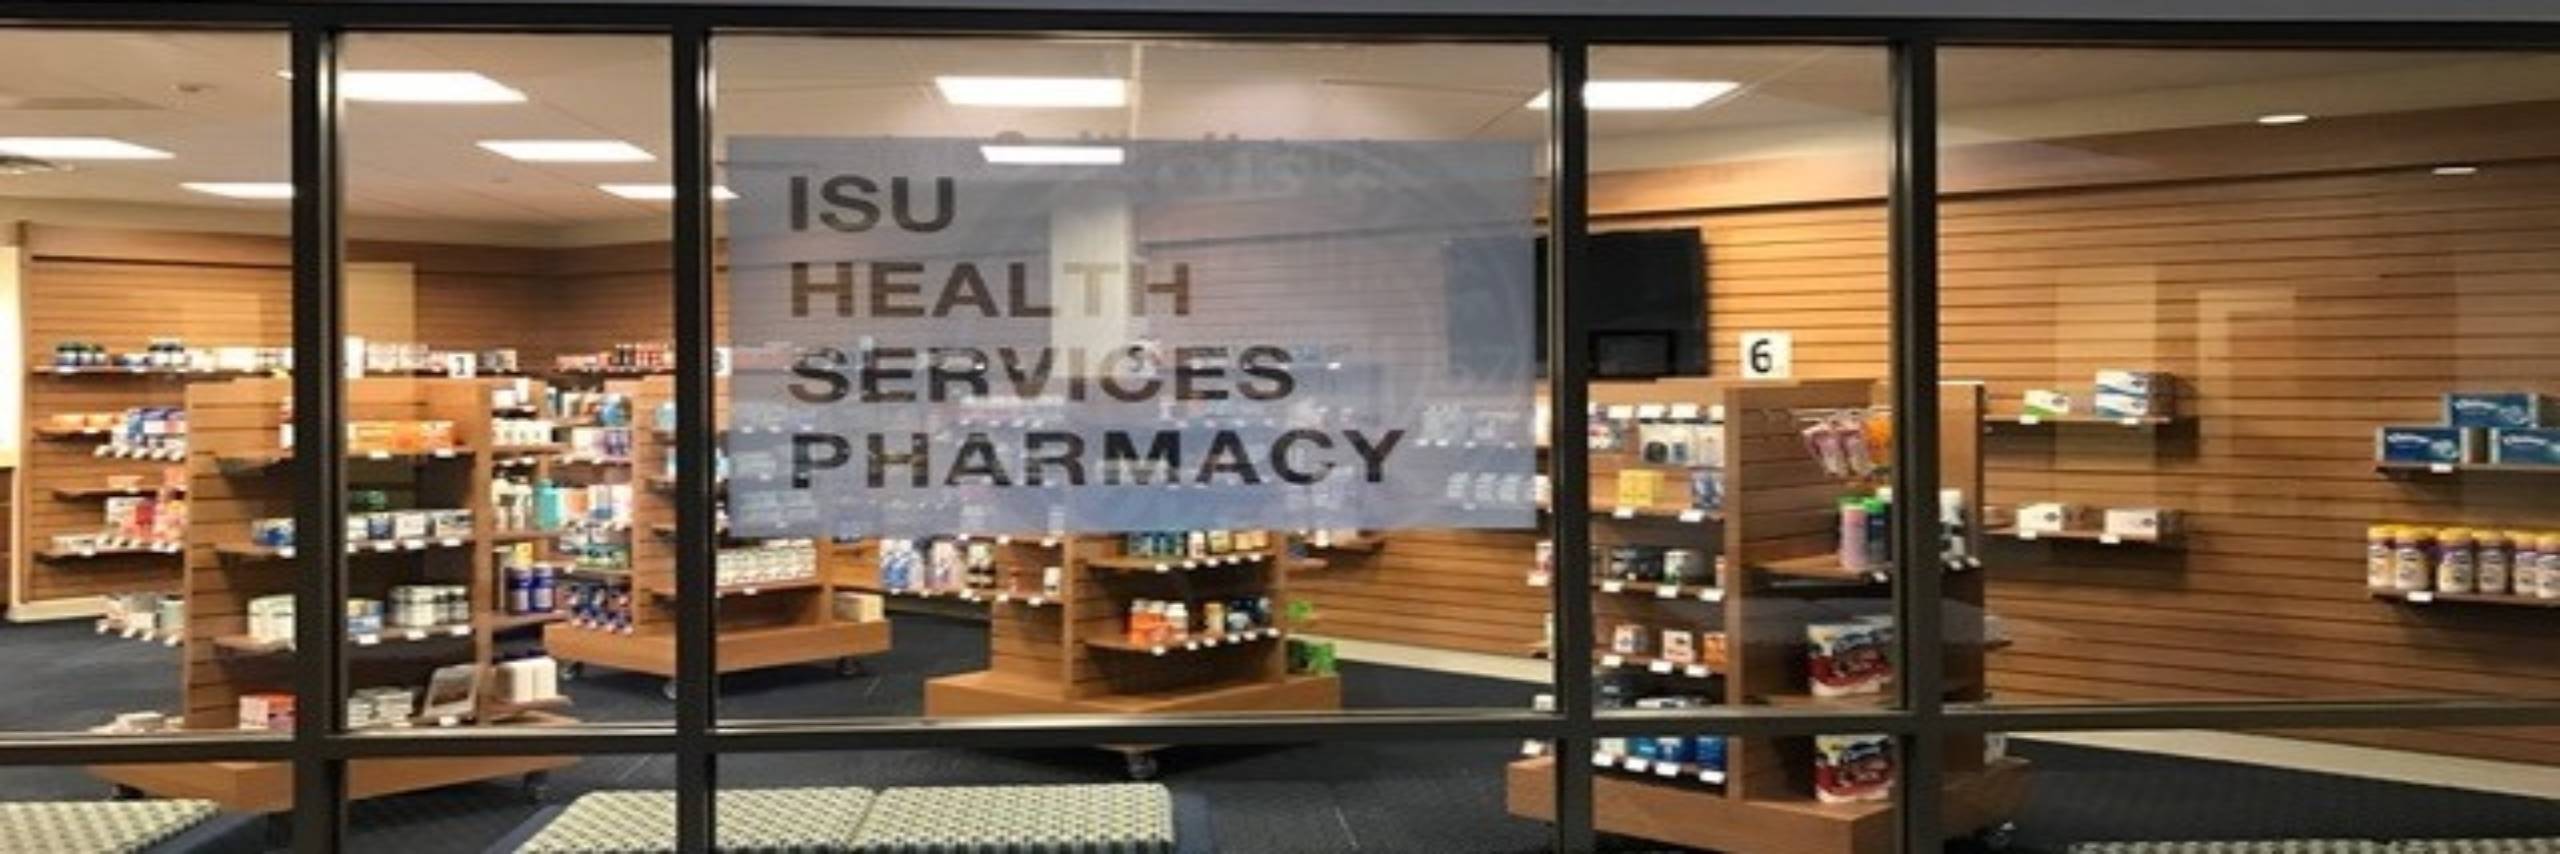 ISU pharmacy lobby